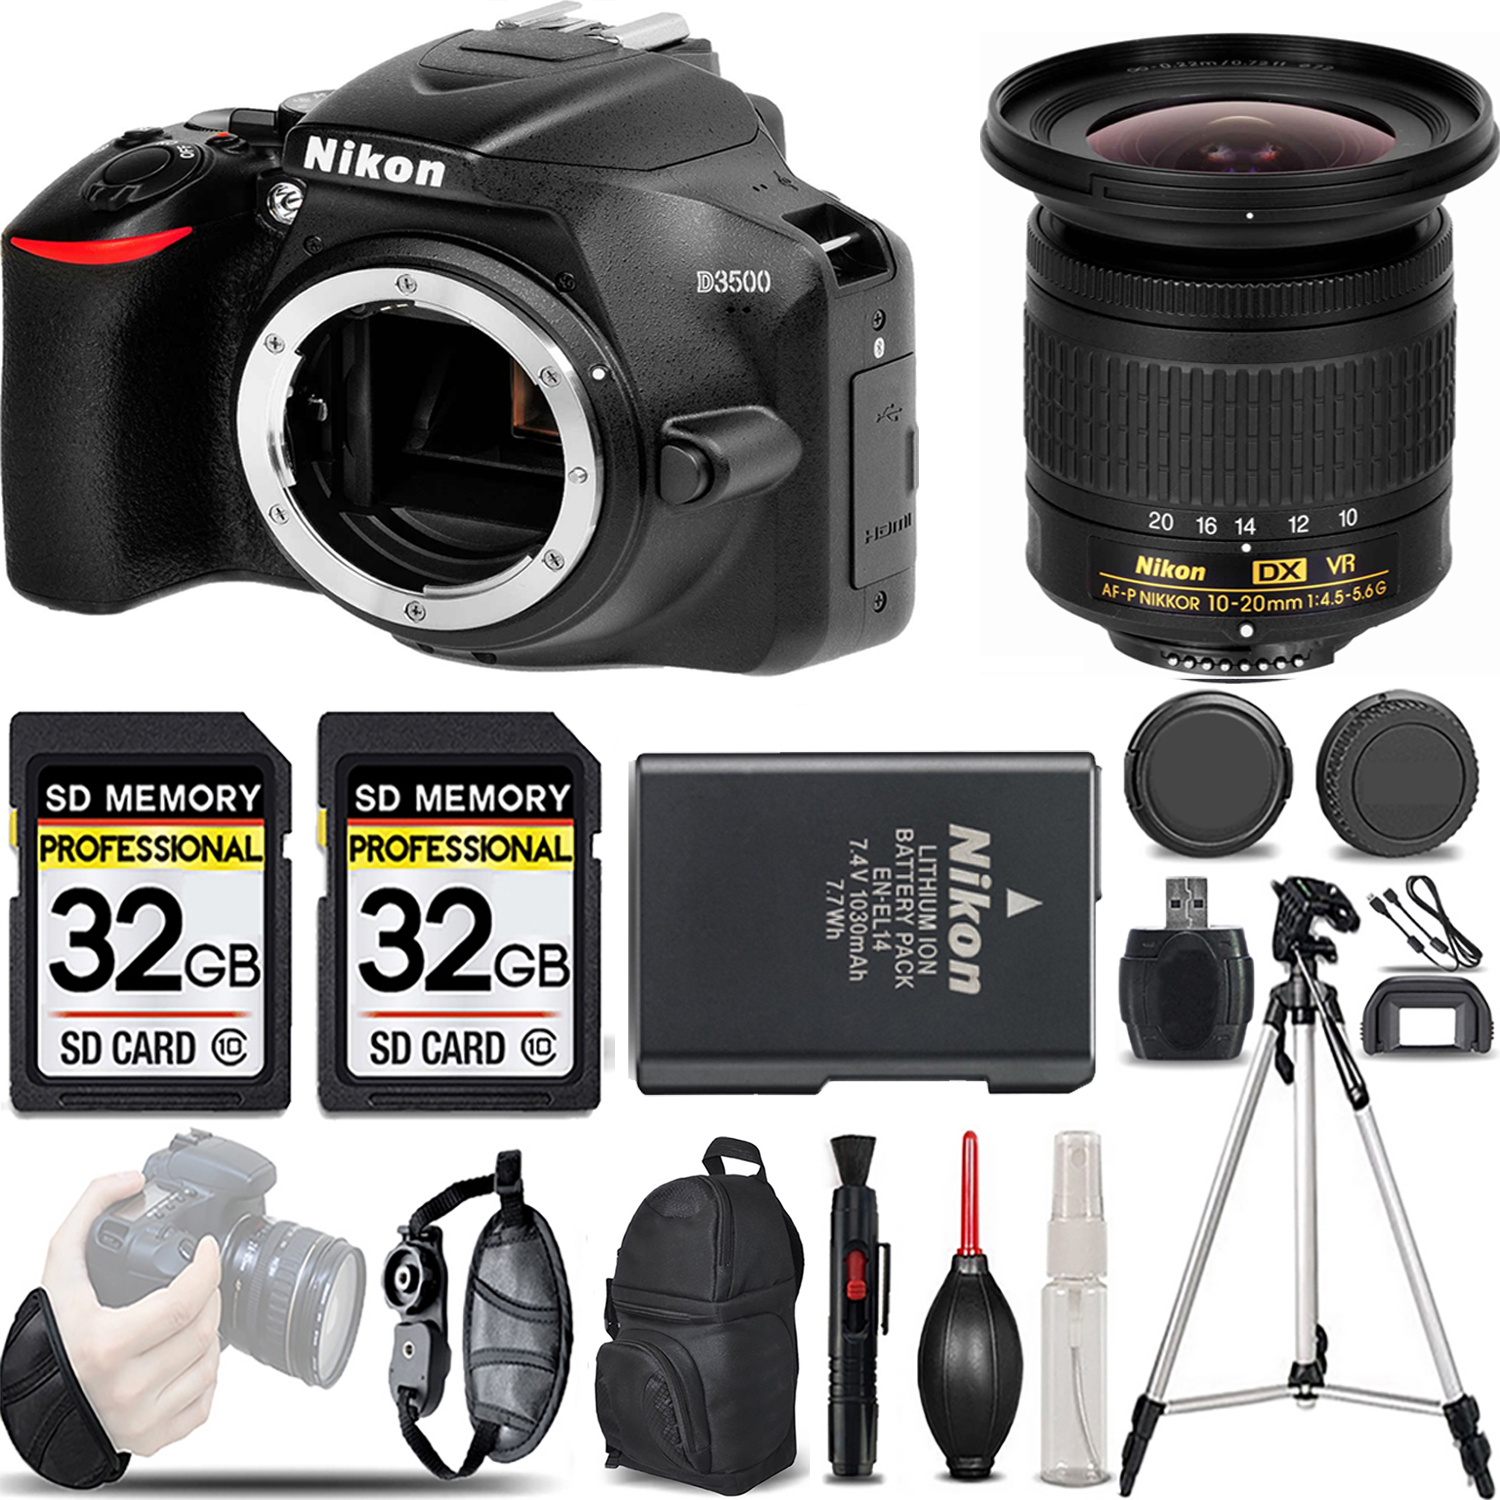 D3500 DSLR Camera (Body Only) + 10-20mm f/4.5-5.6G Lens - LOADED KIT *FREE SHIPPING*